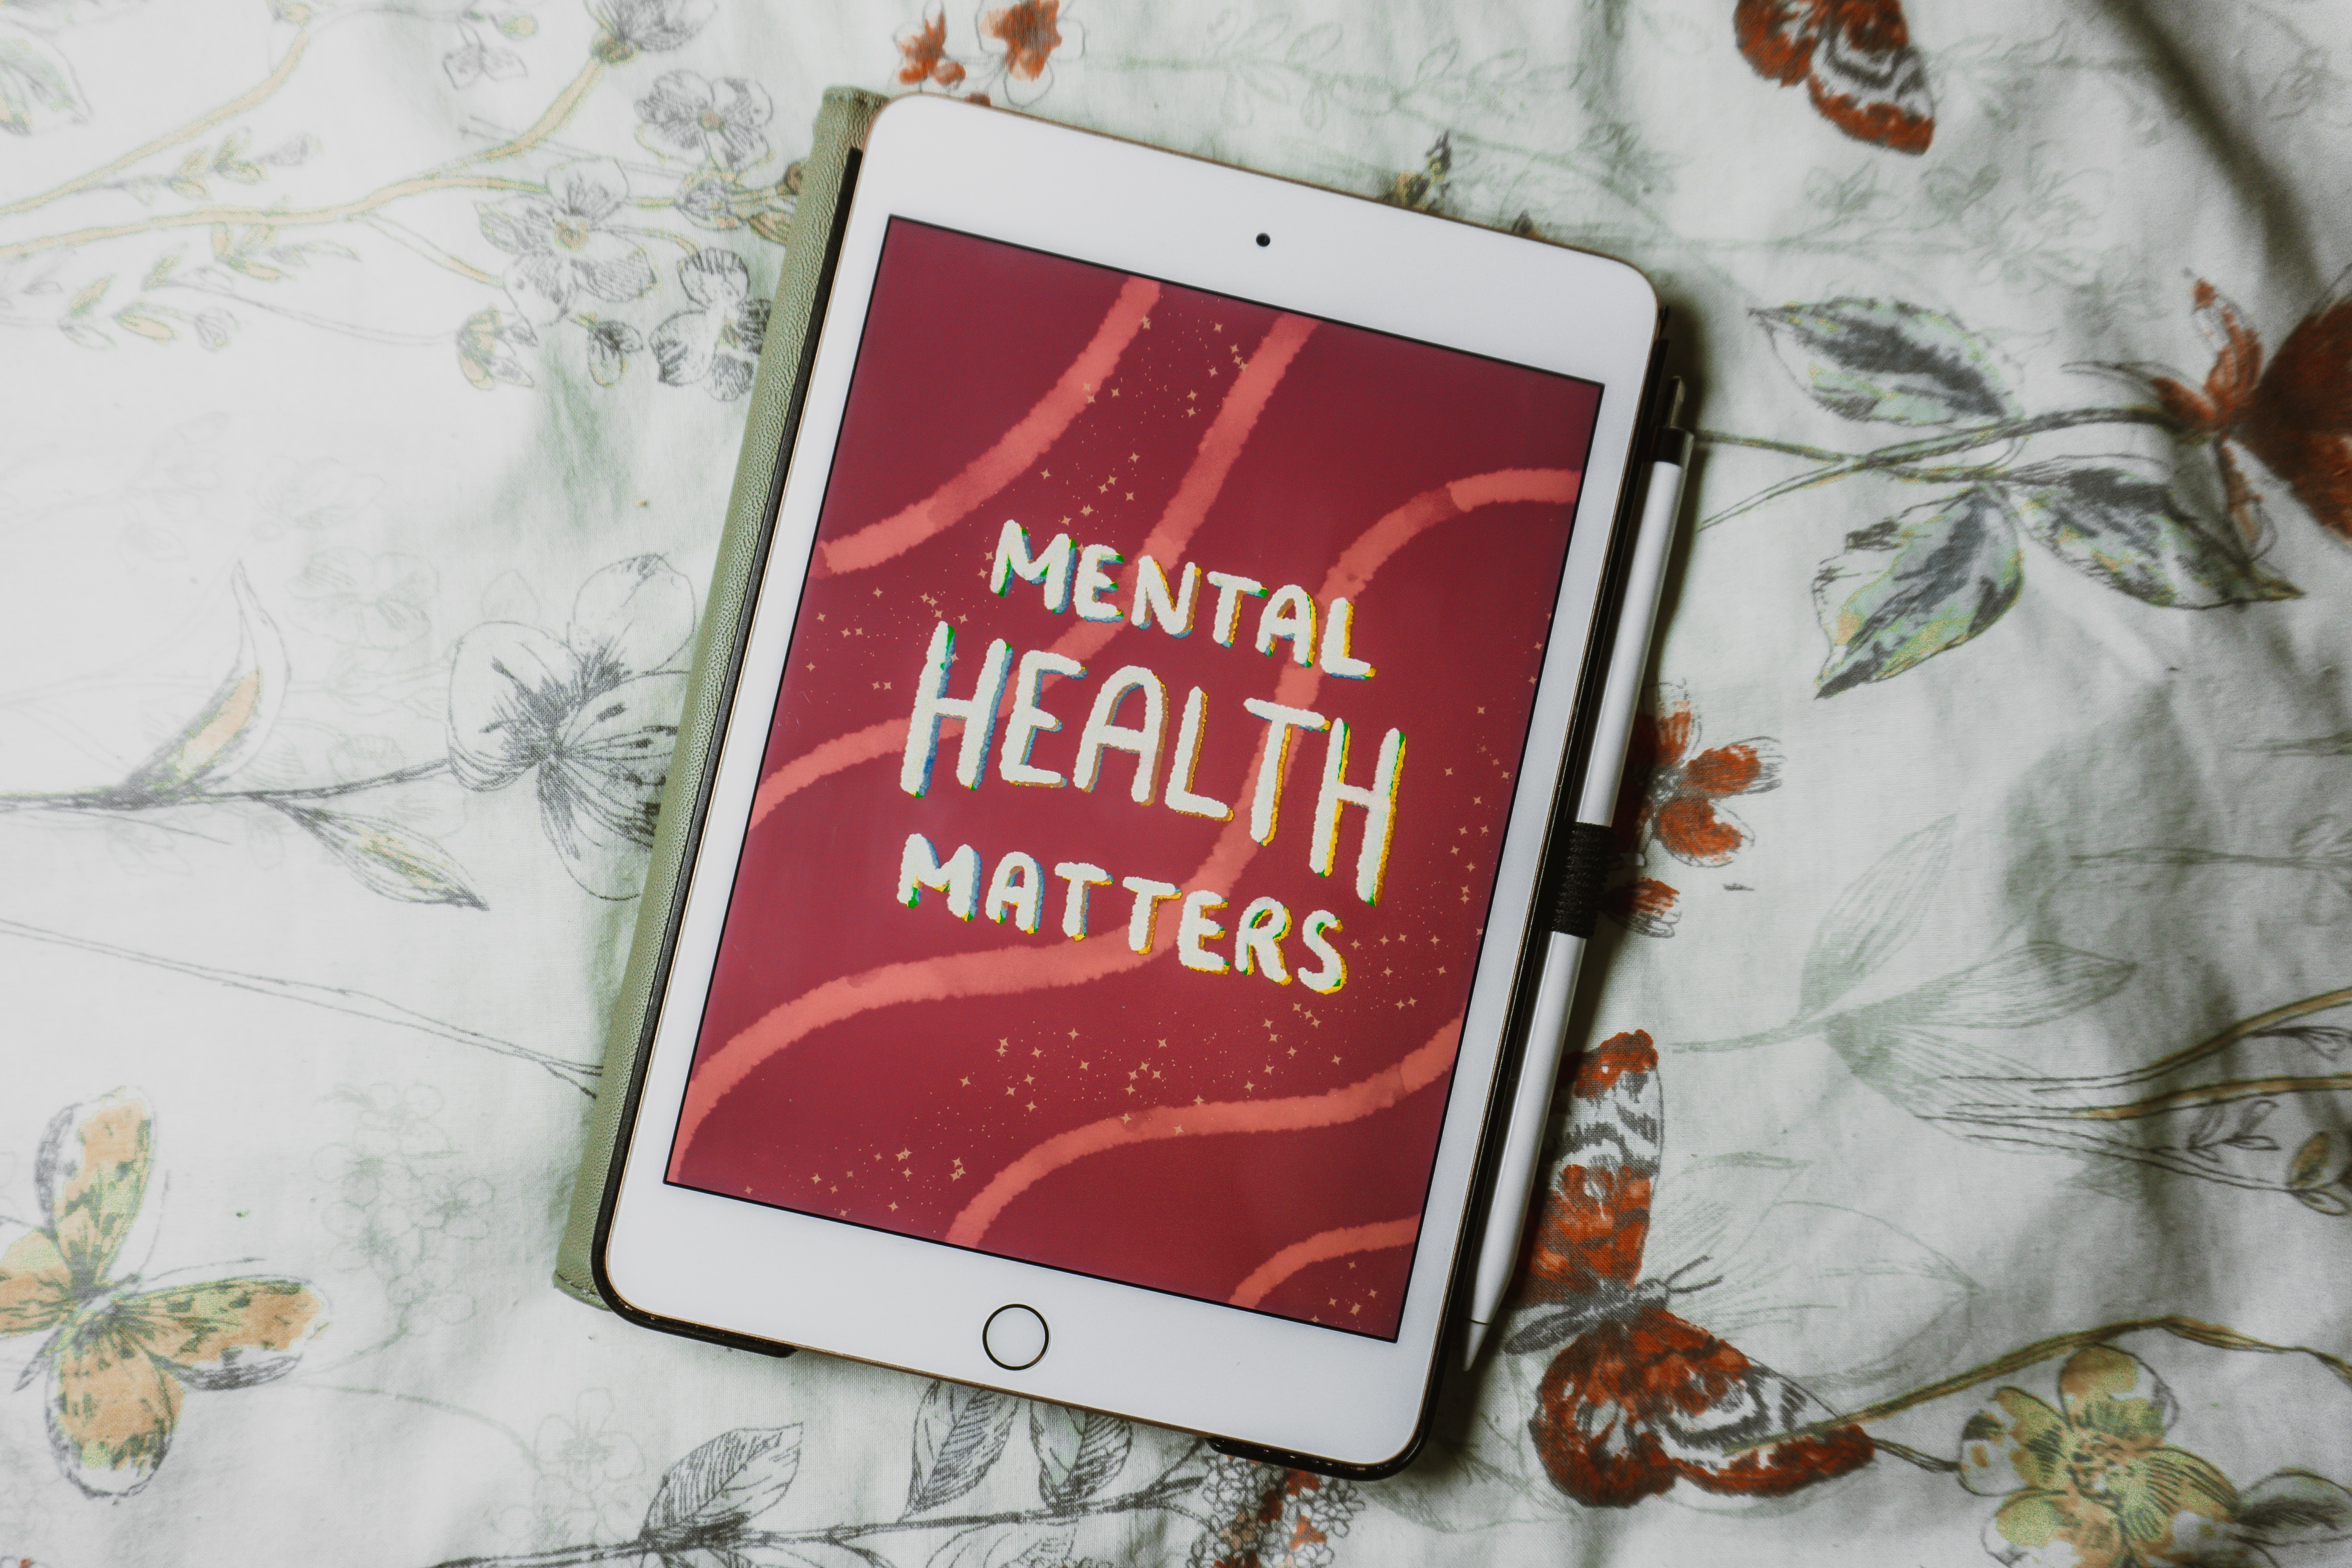 Mental Health matters written on an ipad